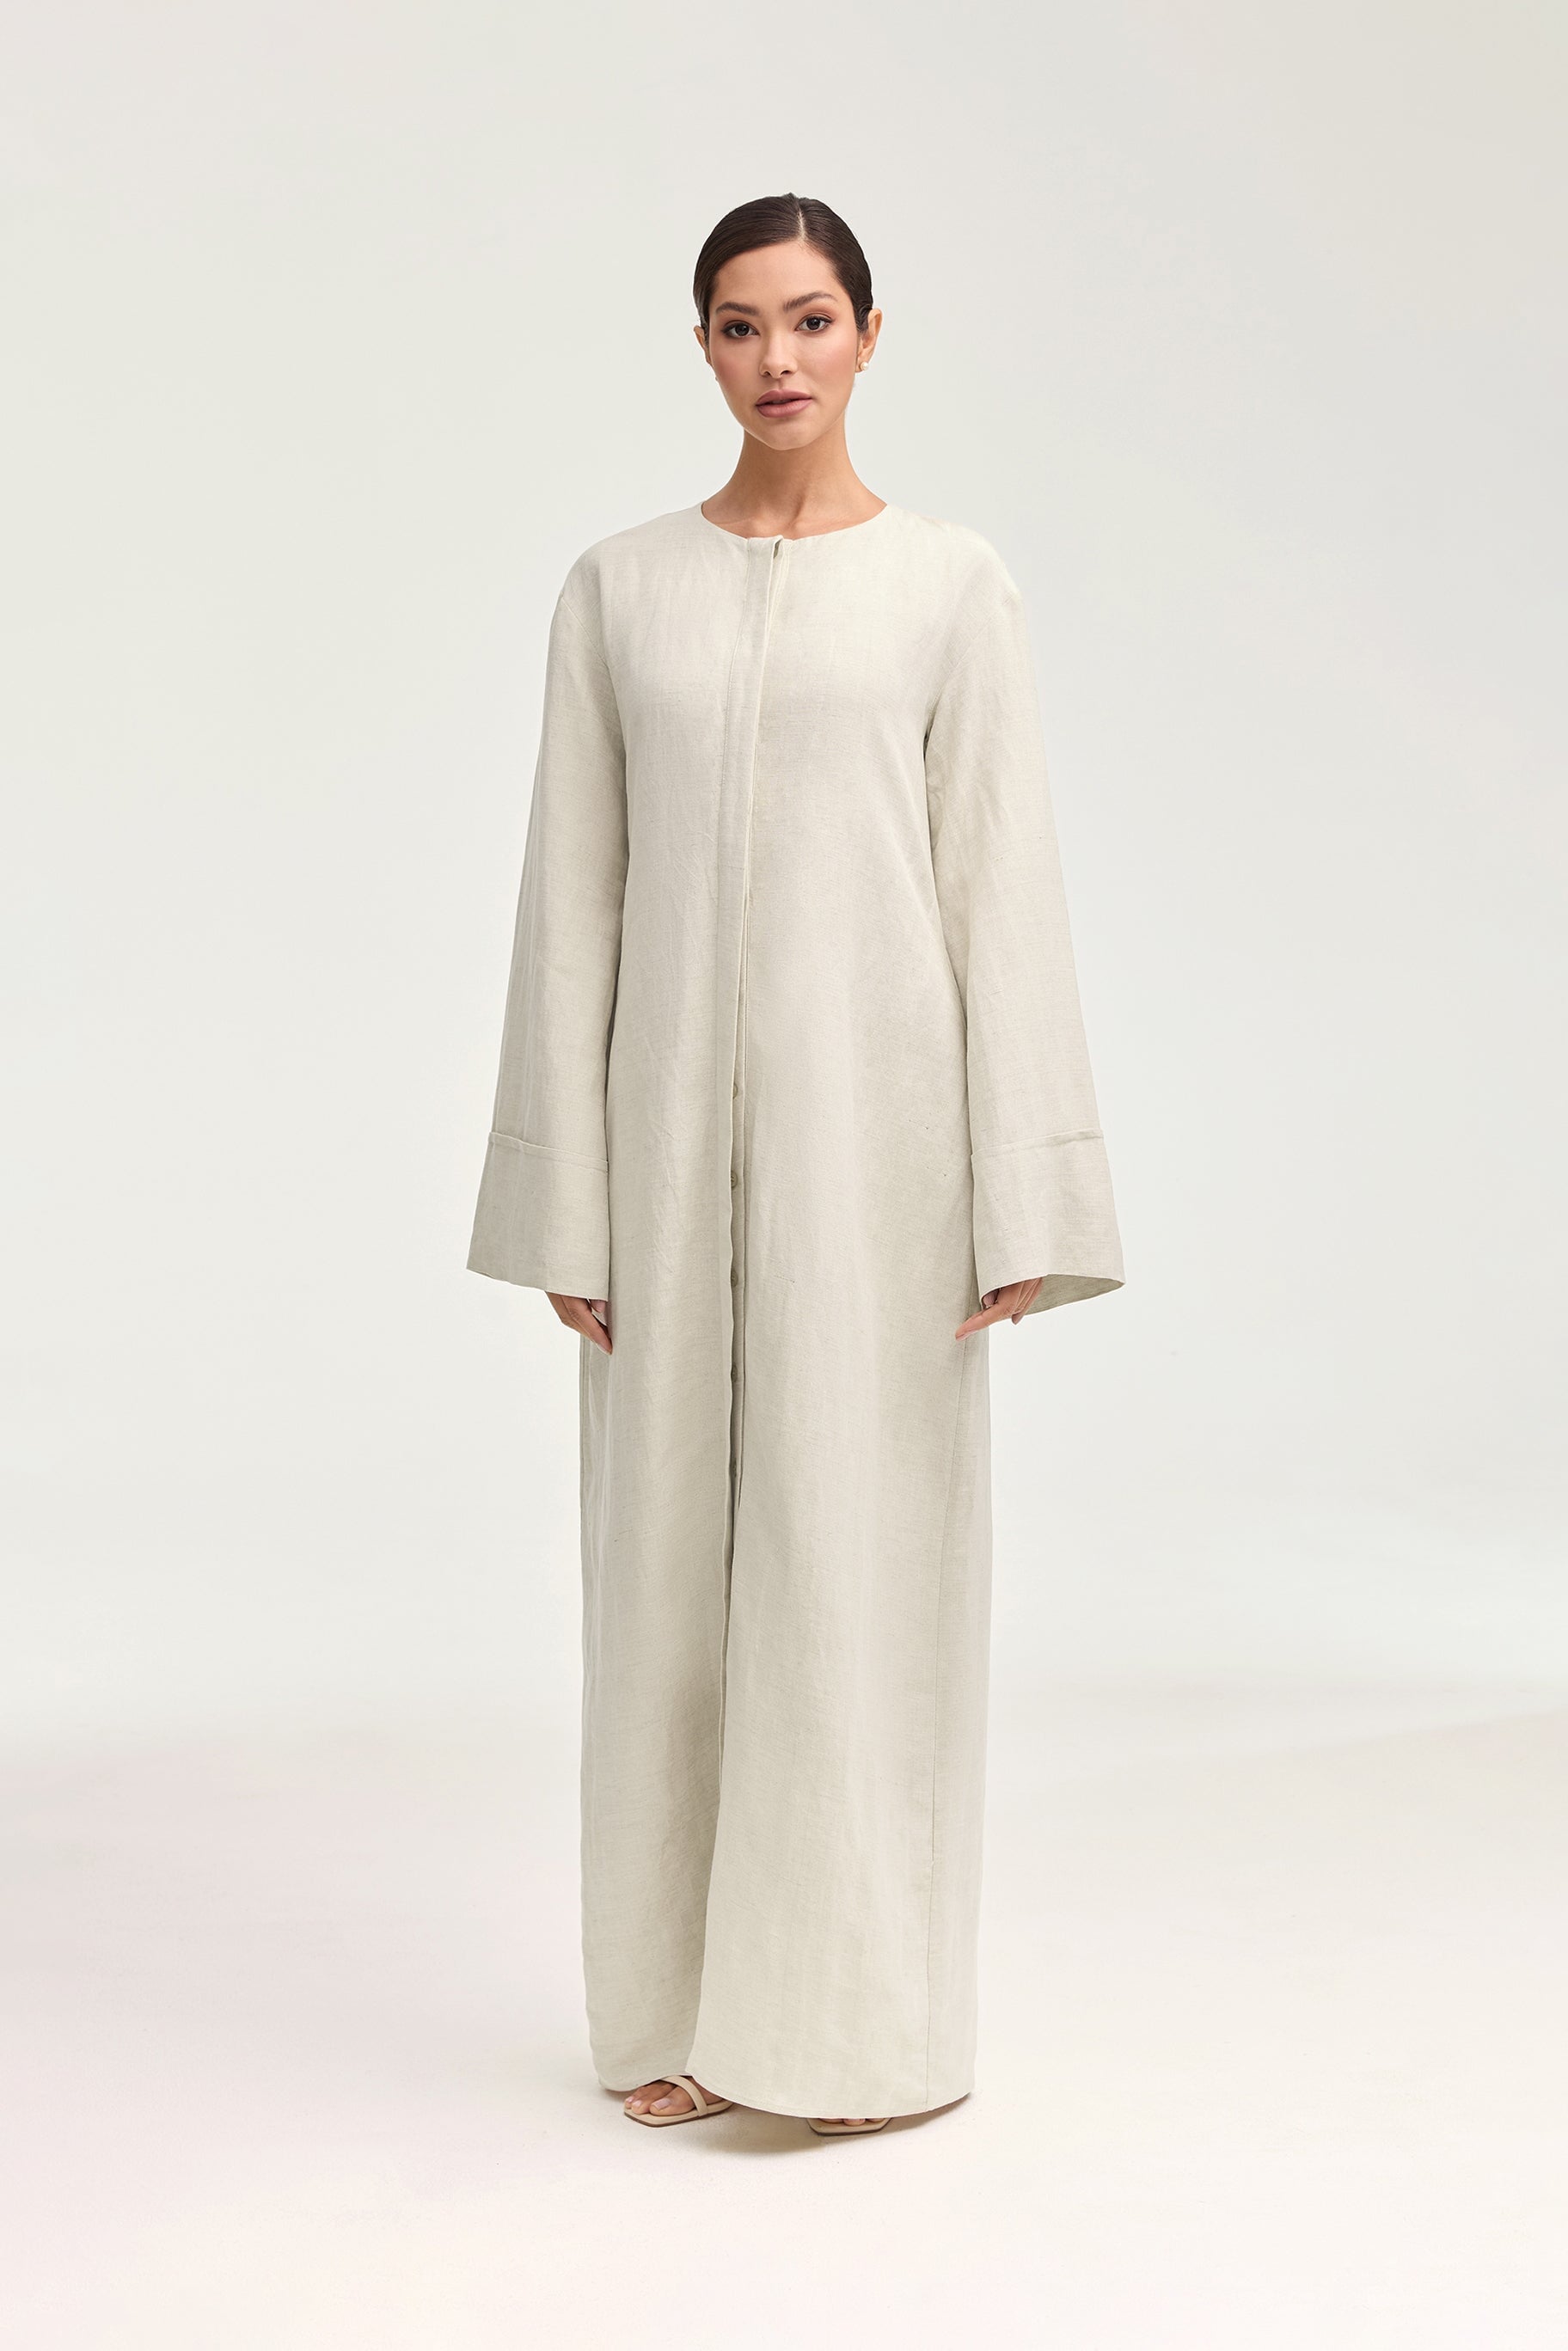 Lana Linen Button Down Maxi Dress - Oatmeal Clothing epschoolboard 